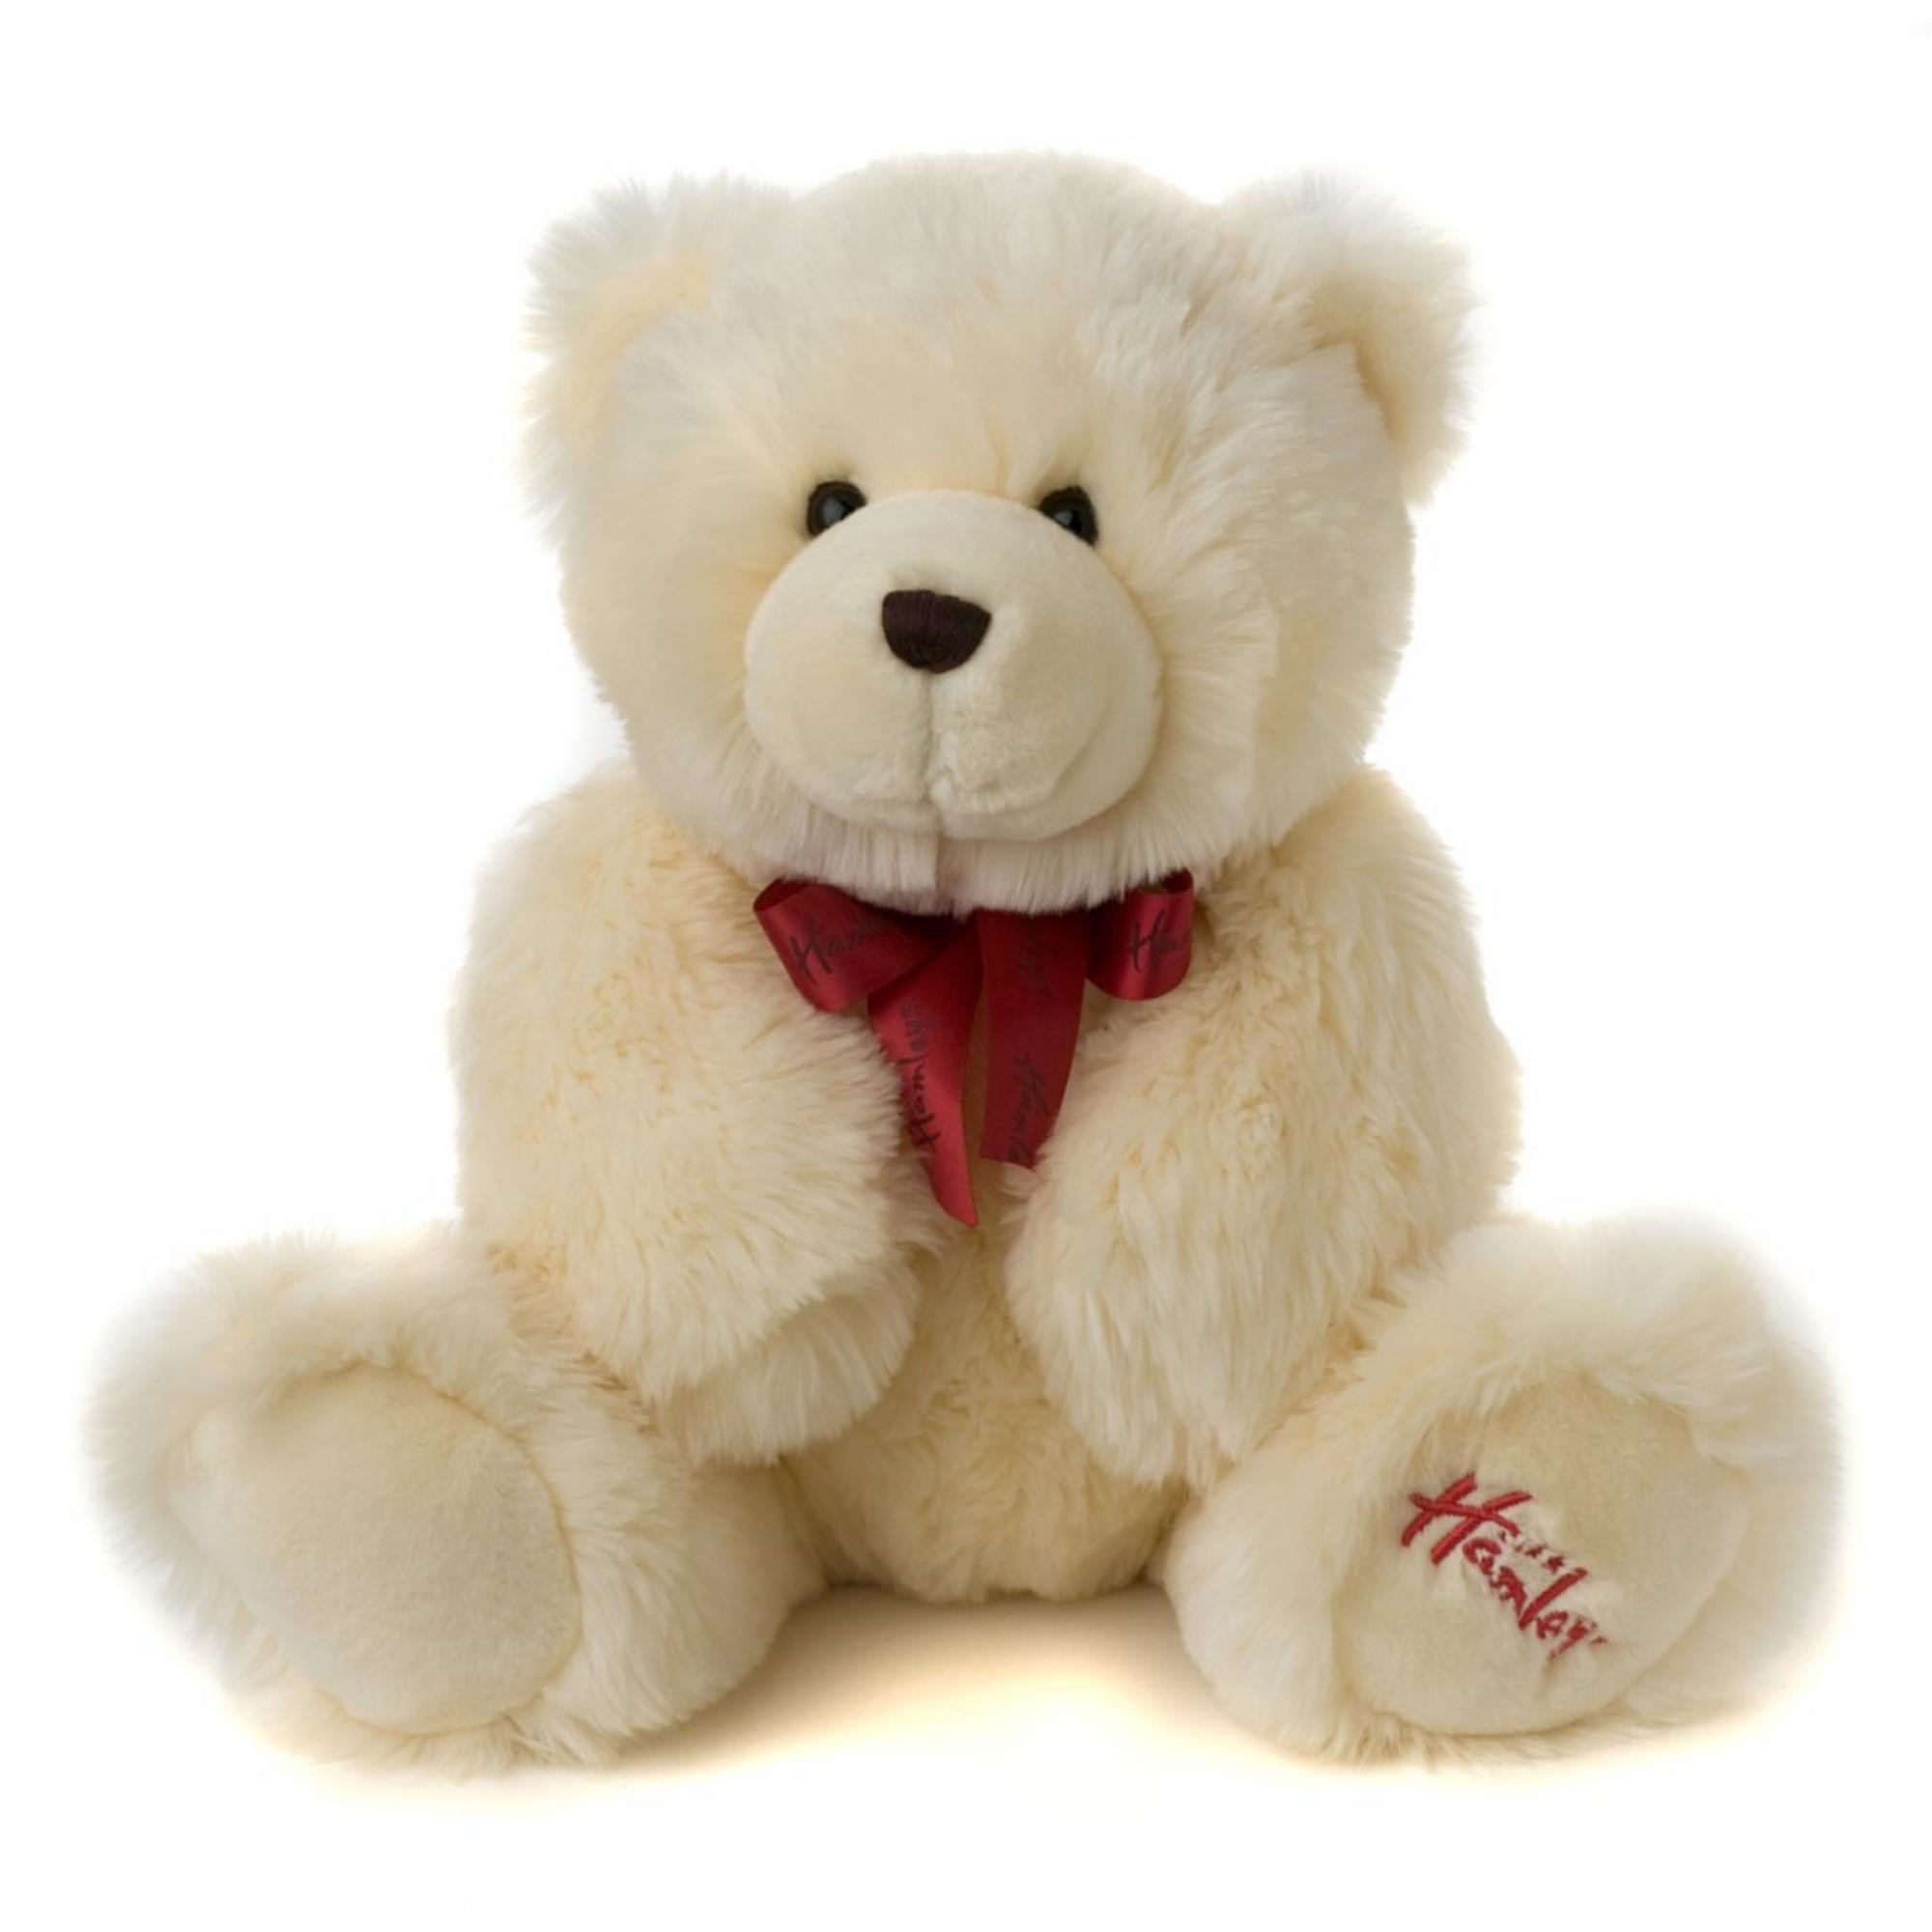 taddy bear wallpaper,stuffed toy,teddy bear,toy,plush,bear